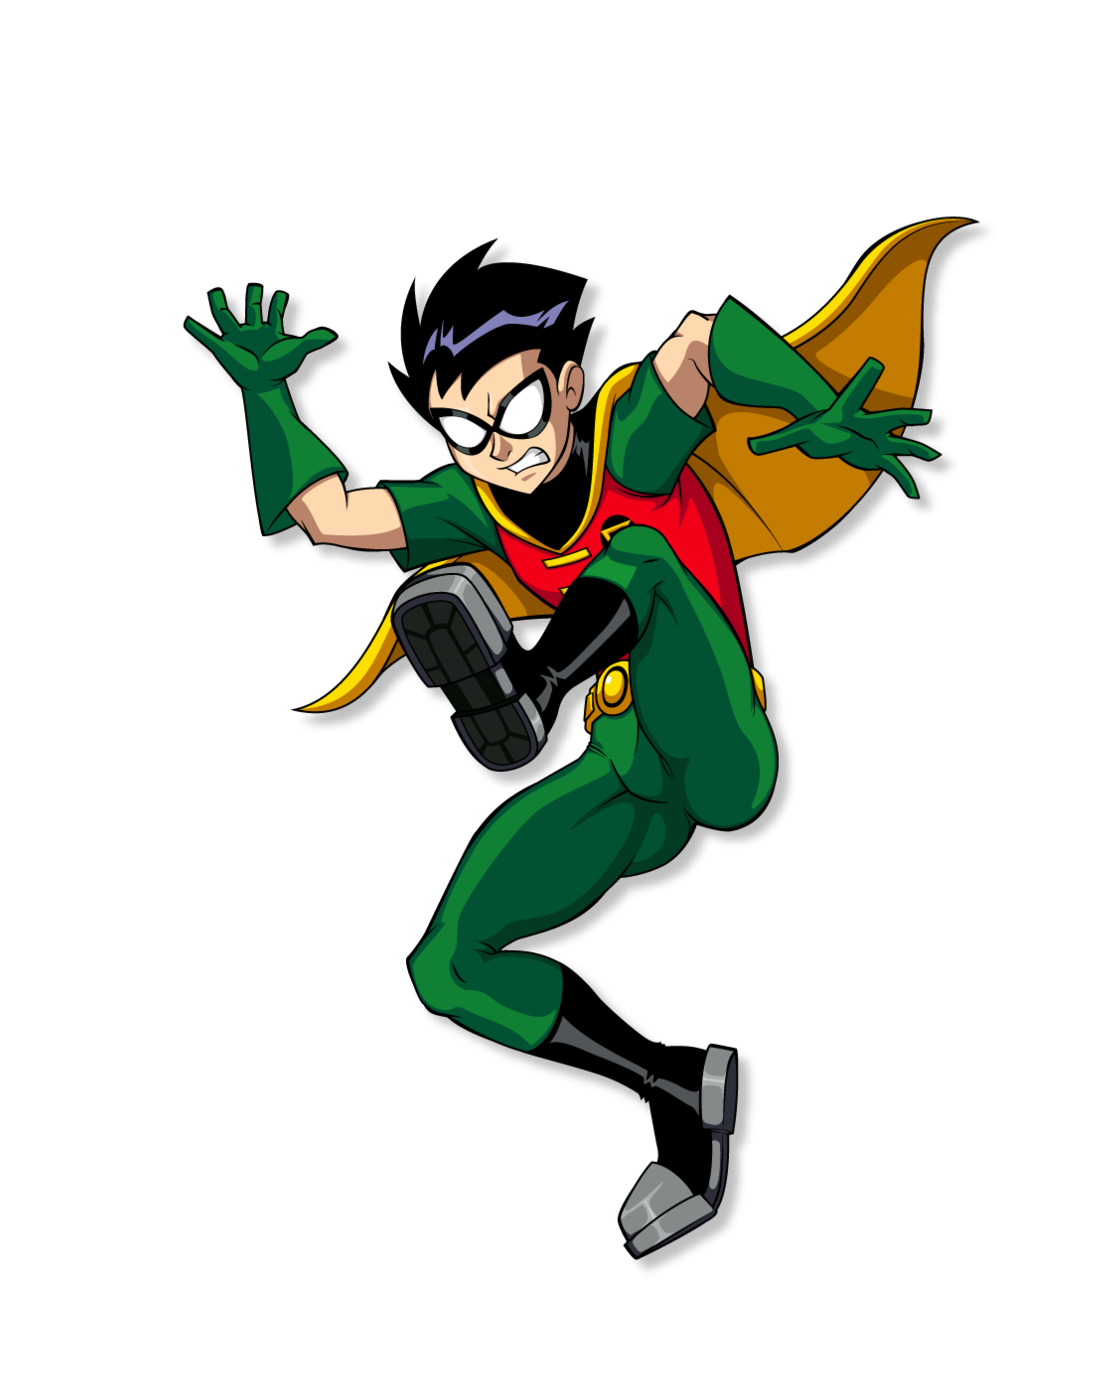 Superhero Robin PNG HD Image - Superhero Robin Png